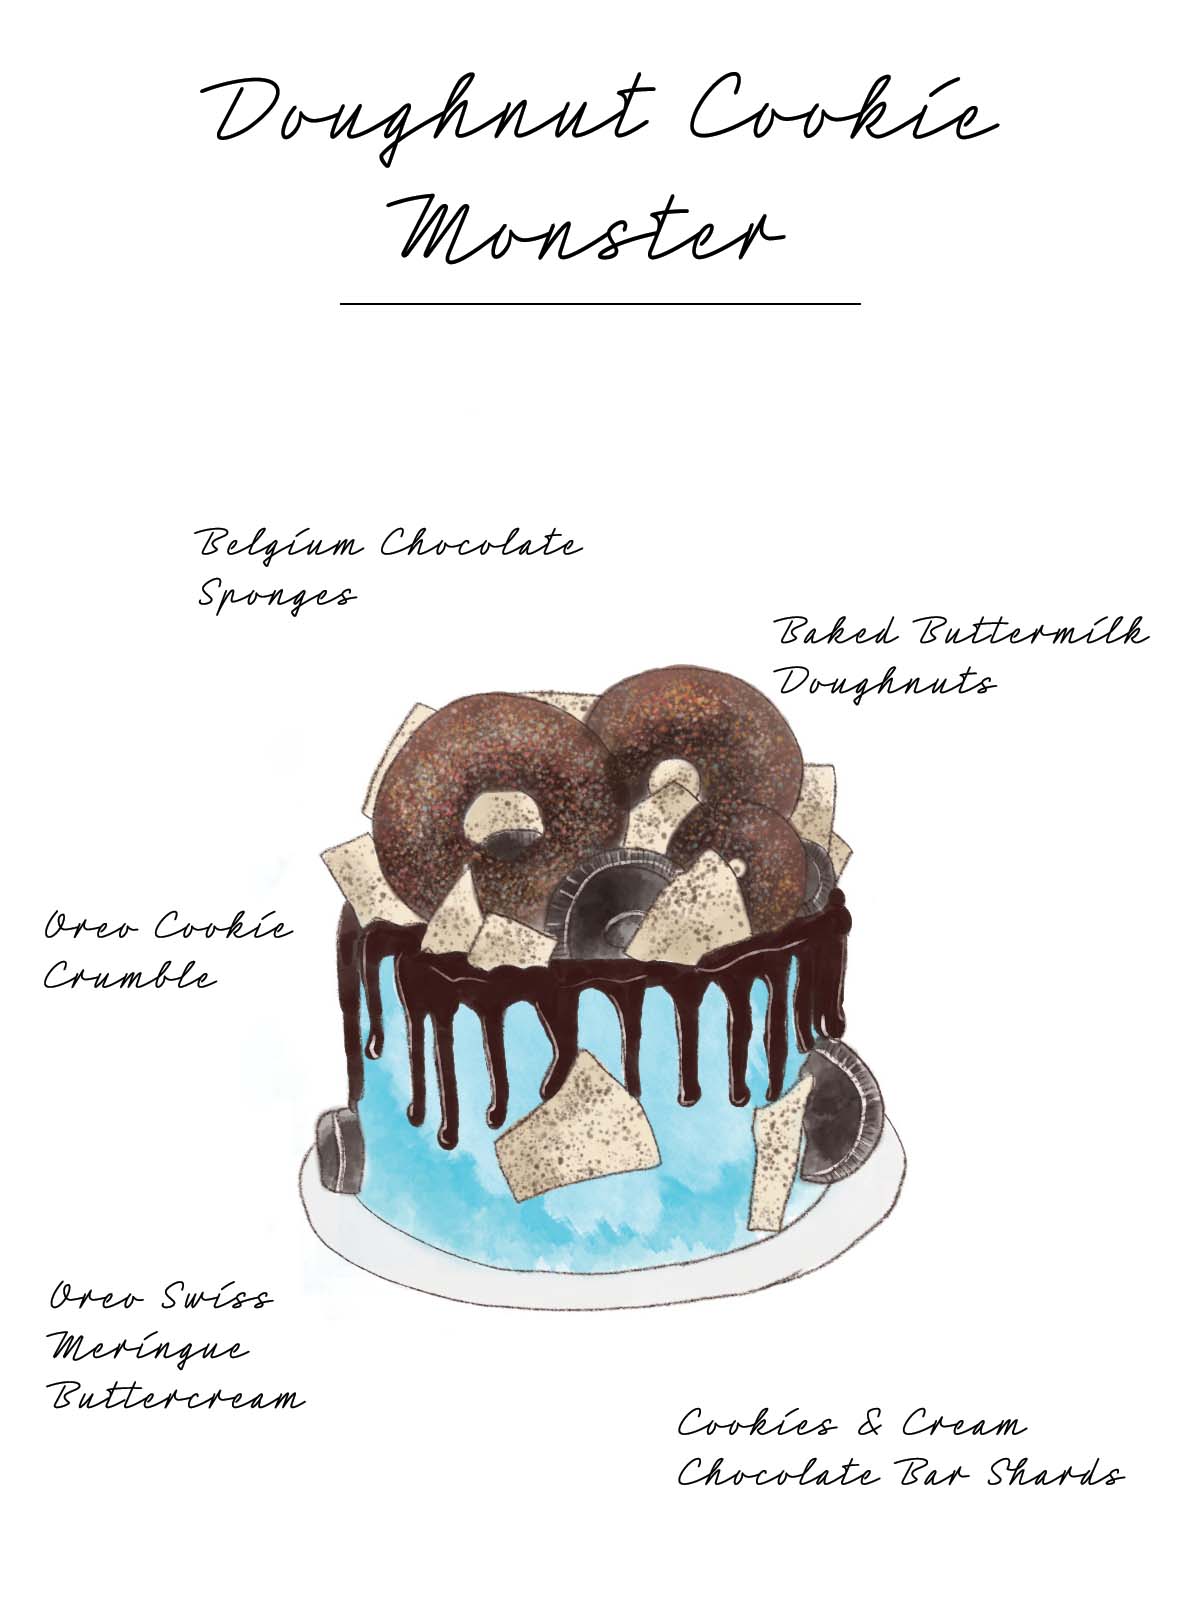 Doughnut Cookie Monster Cake Infographic 